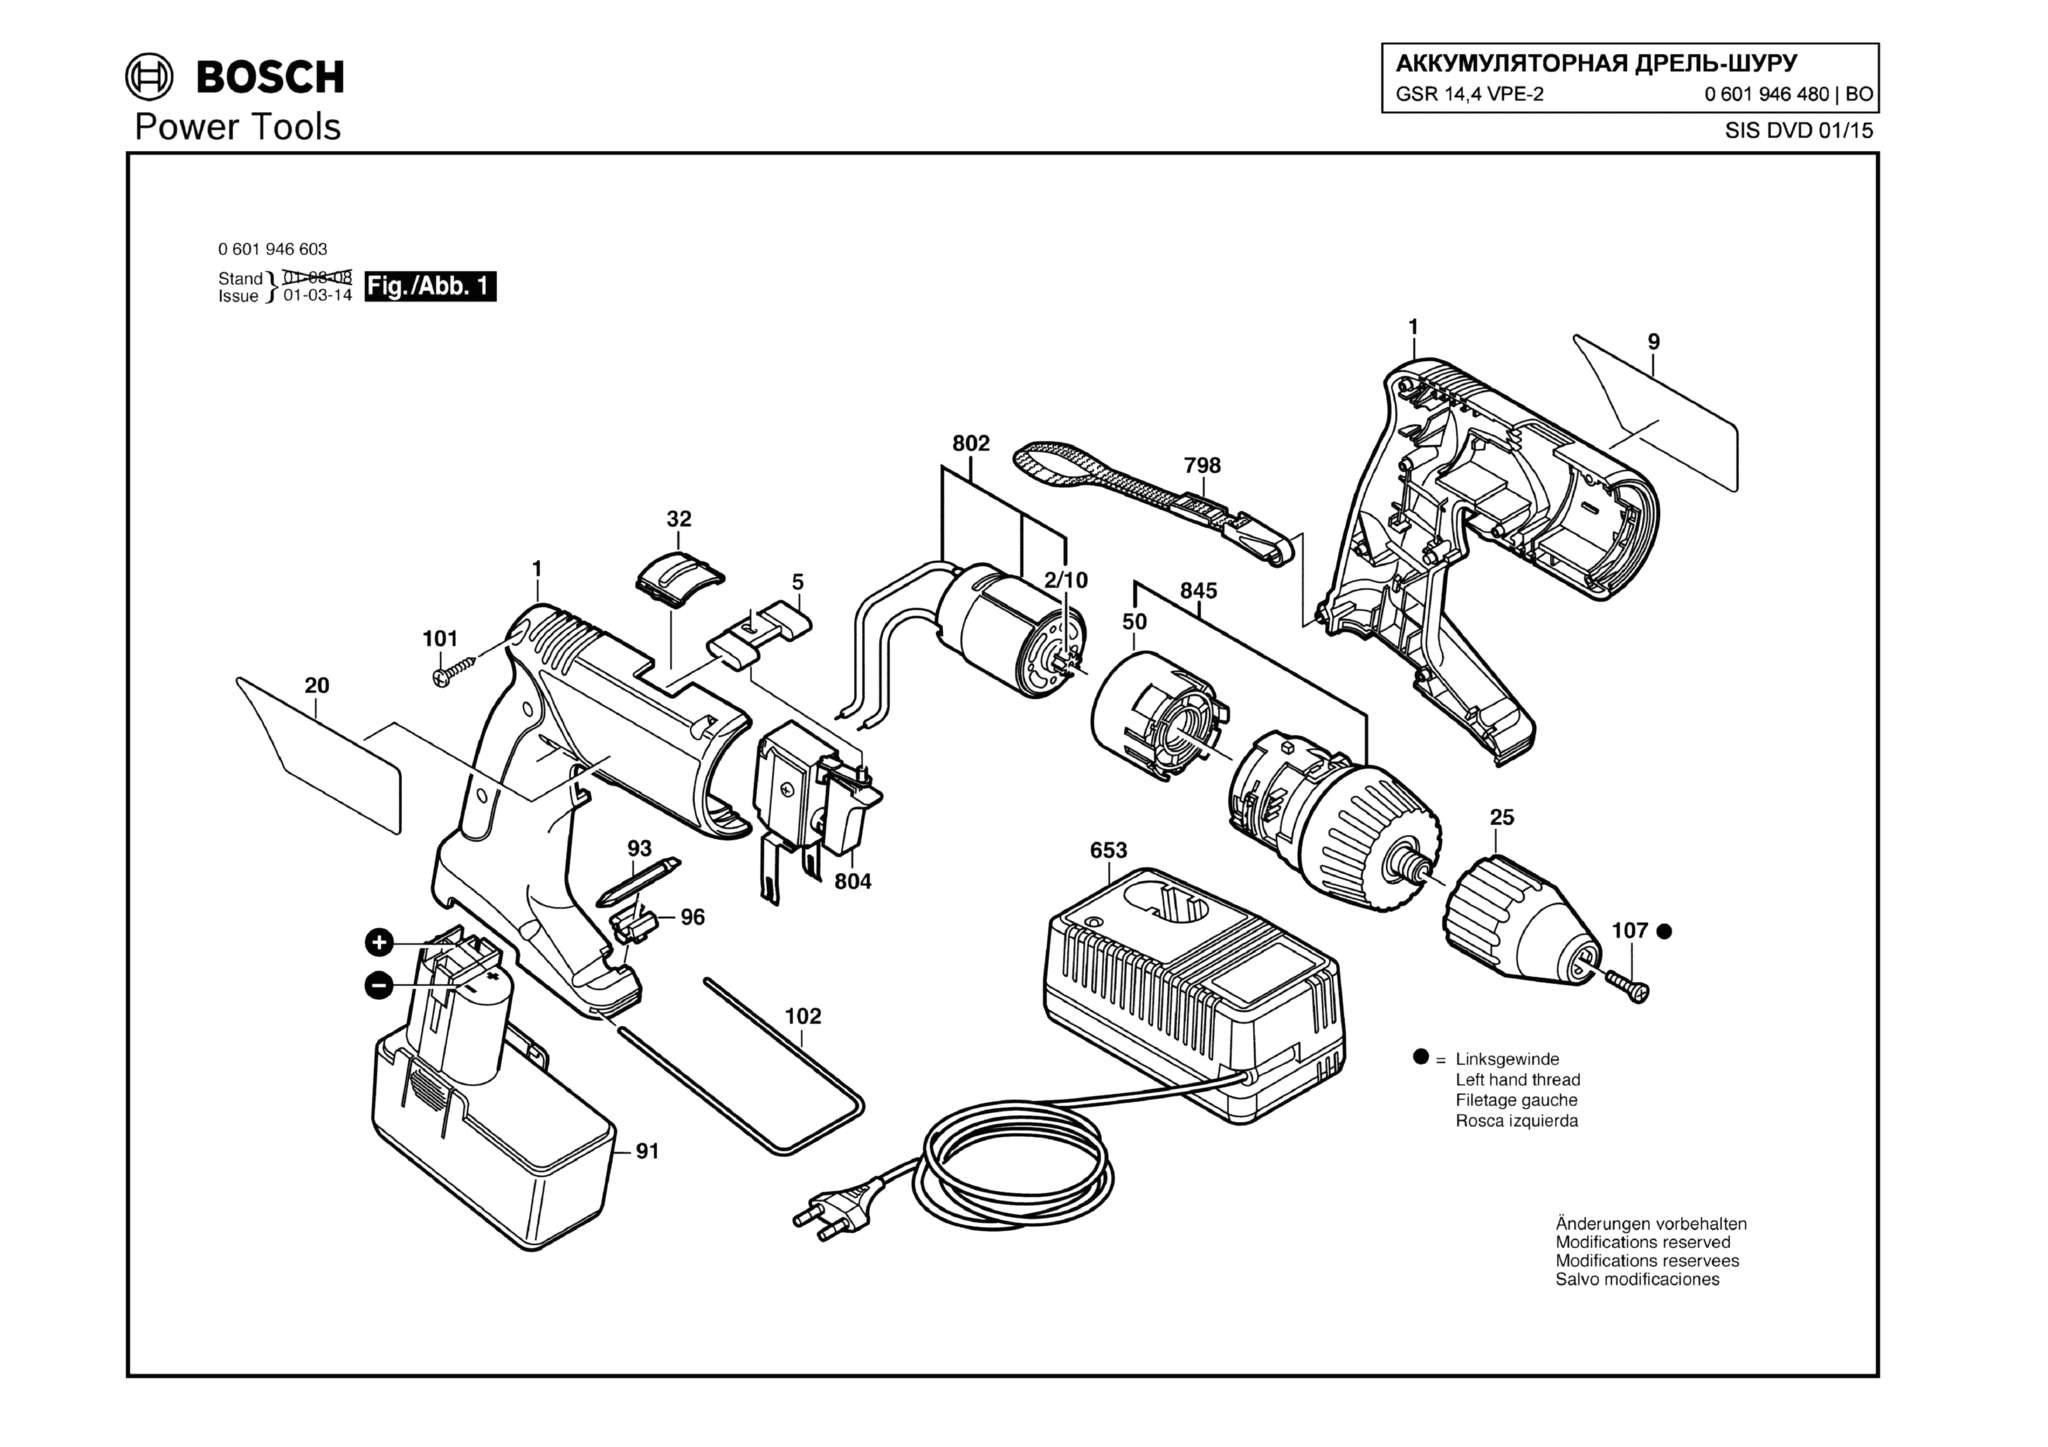 Запчасти, схема и деталировка Bosch GSR 14,4 VPE-2 (ТИП 0601946480)